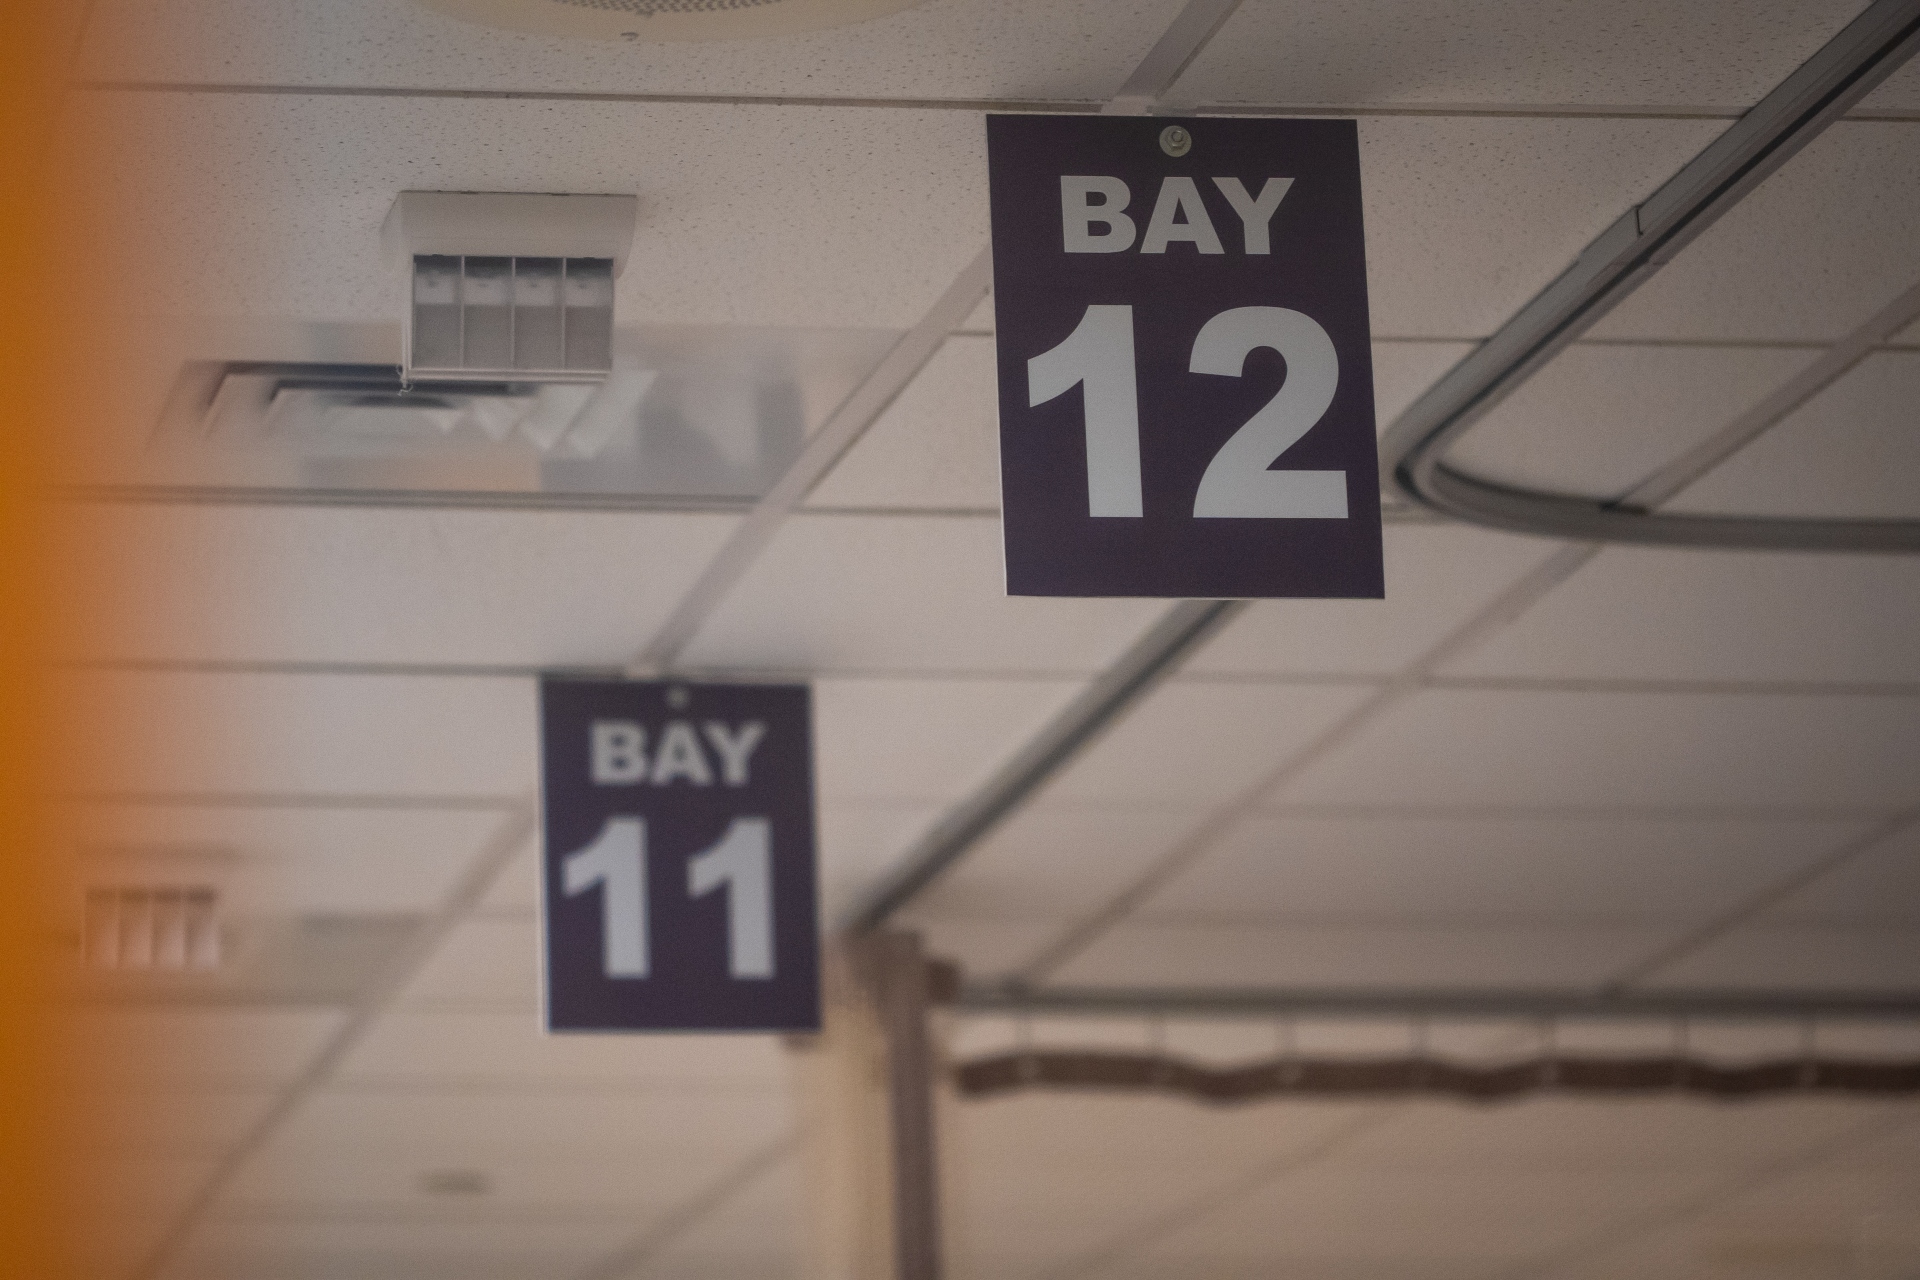 Bay11-Bay12